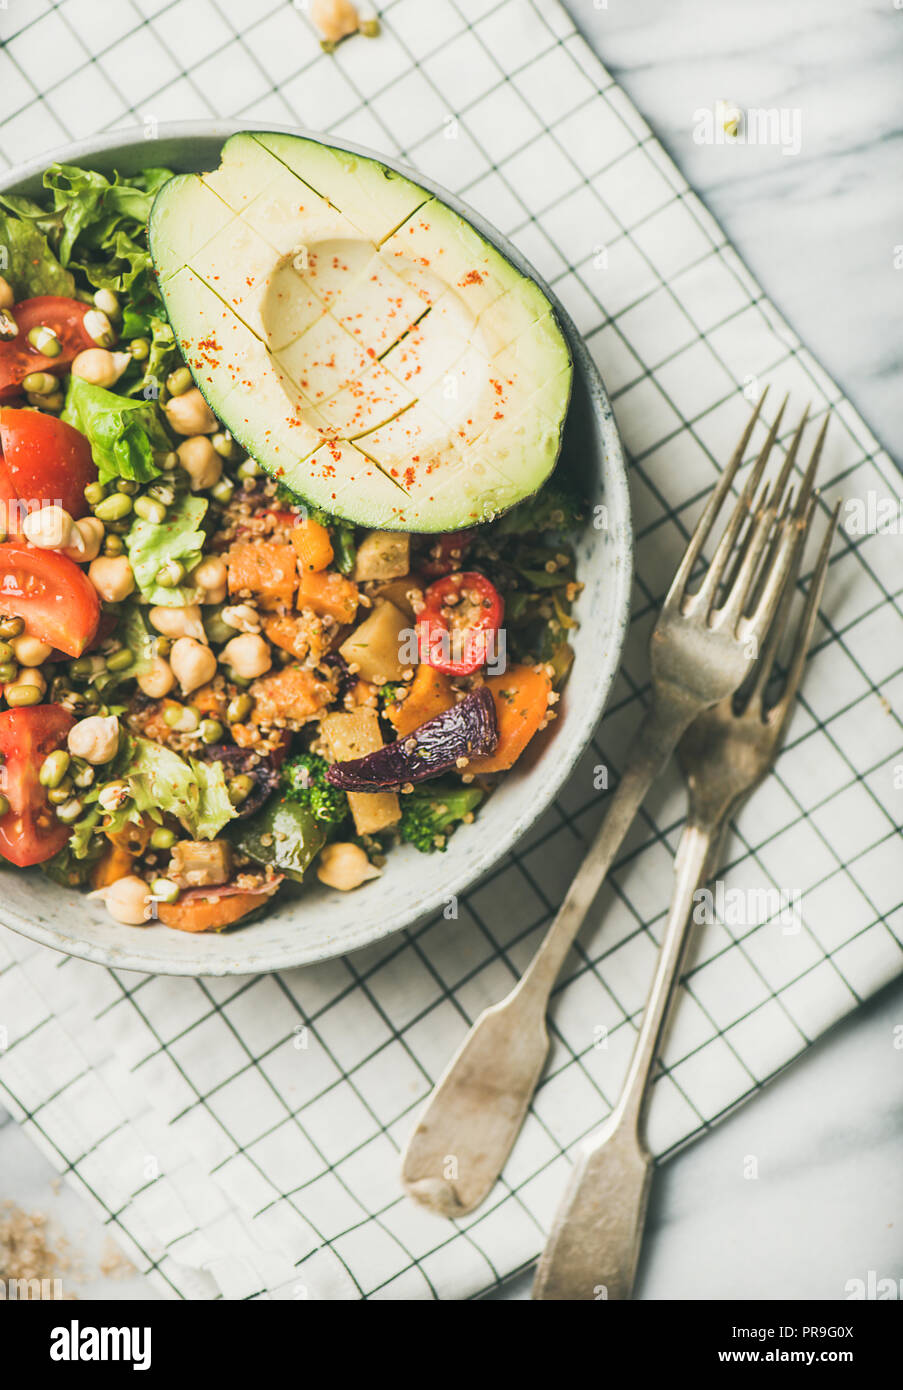 Cena vegana con avocado, cereali, fagioli e verdure, vista dall'alto Foto Stock